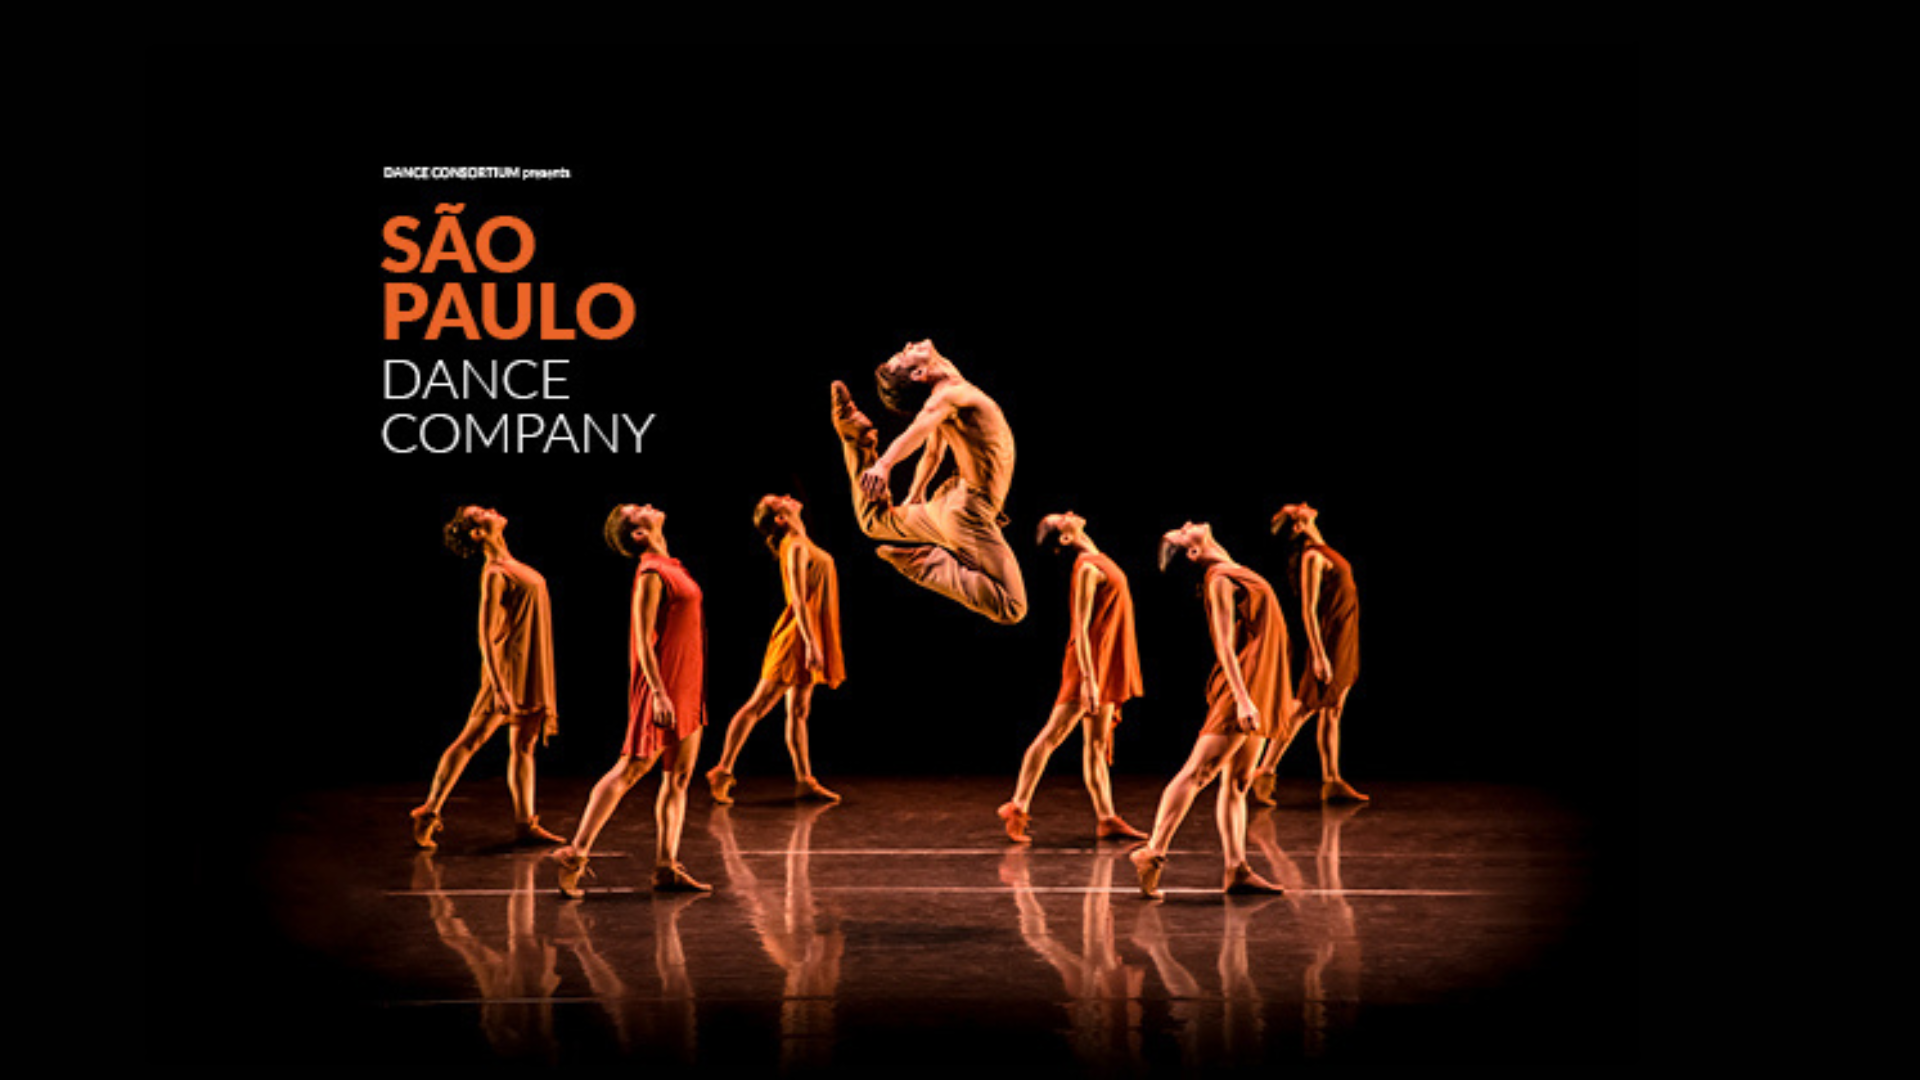 Sᾶo Paulo Dance Company